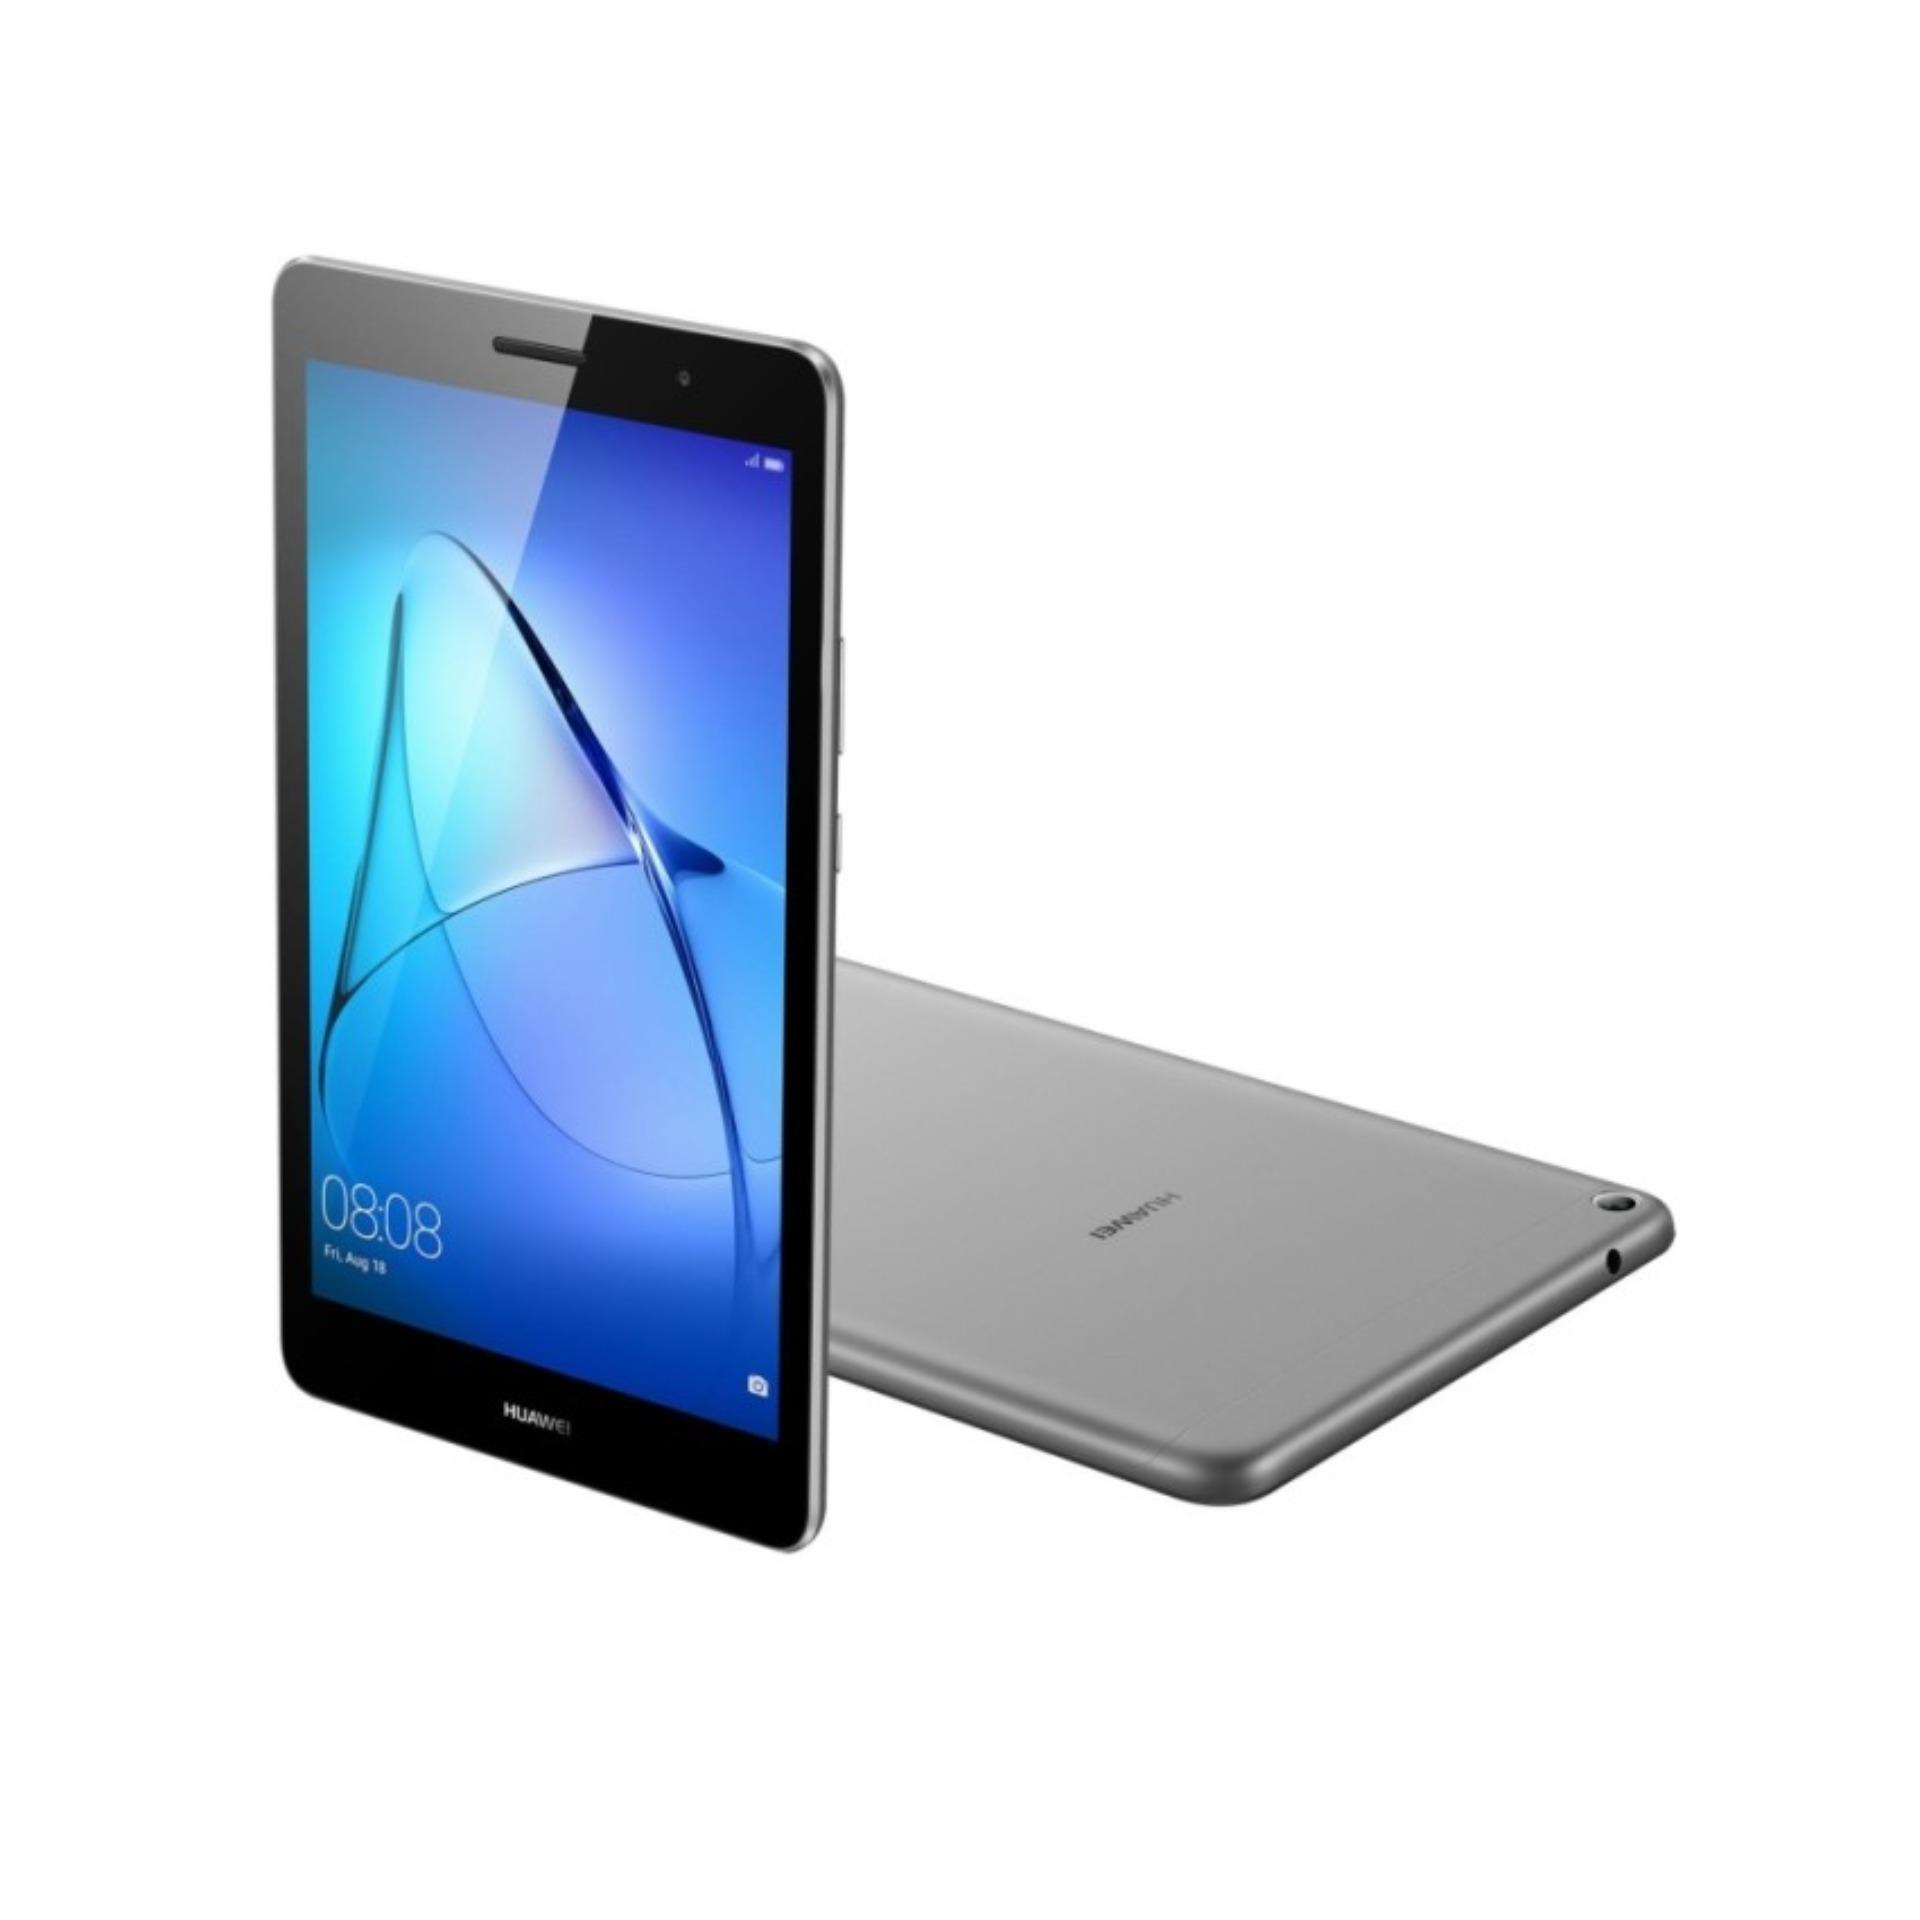 Huawei MediaPad T3 8.0 16GB LTE Tablet